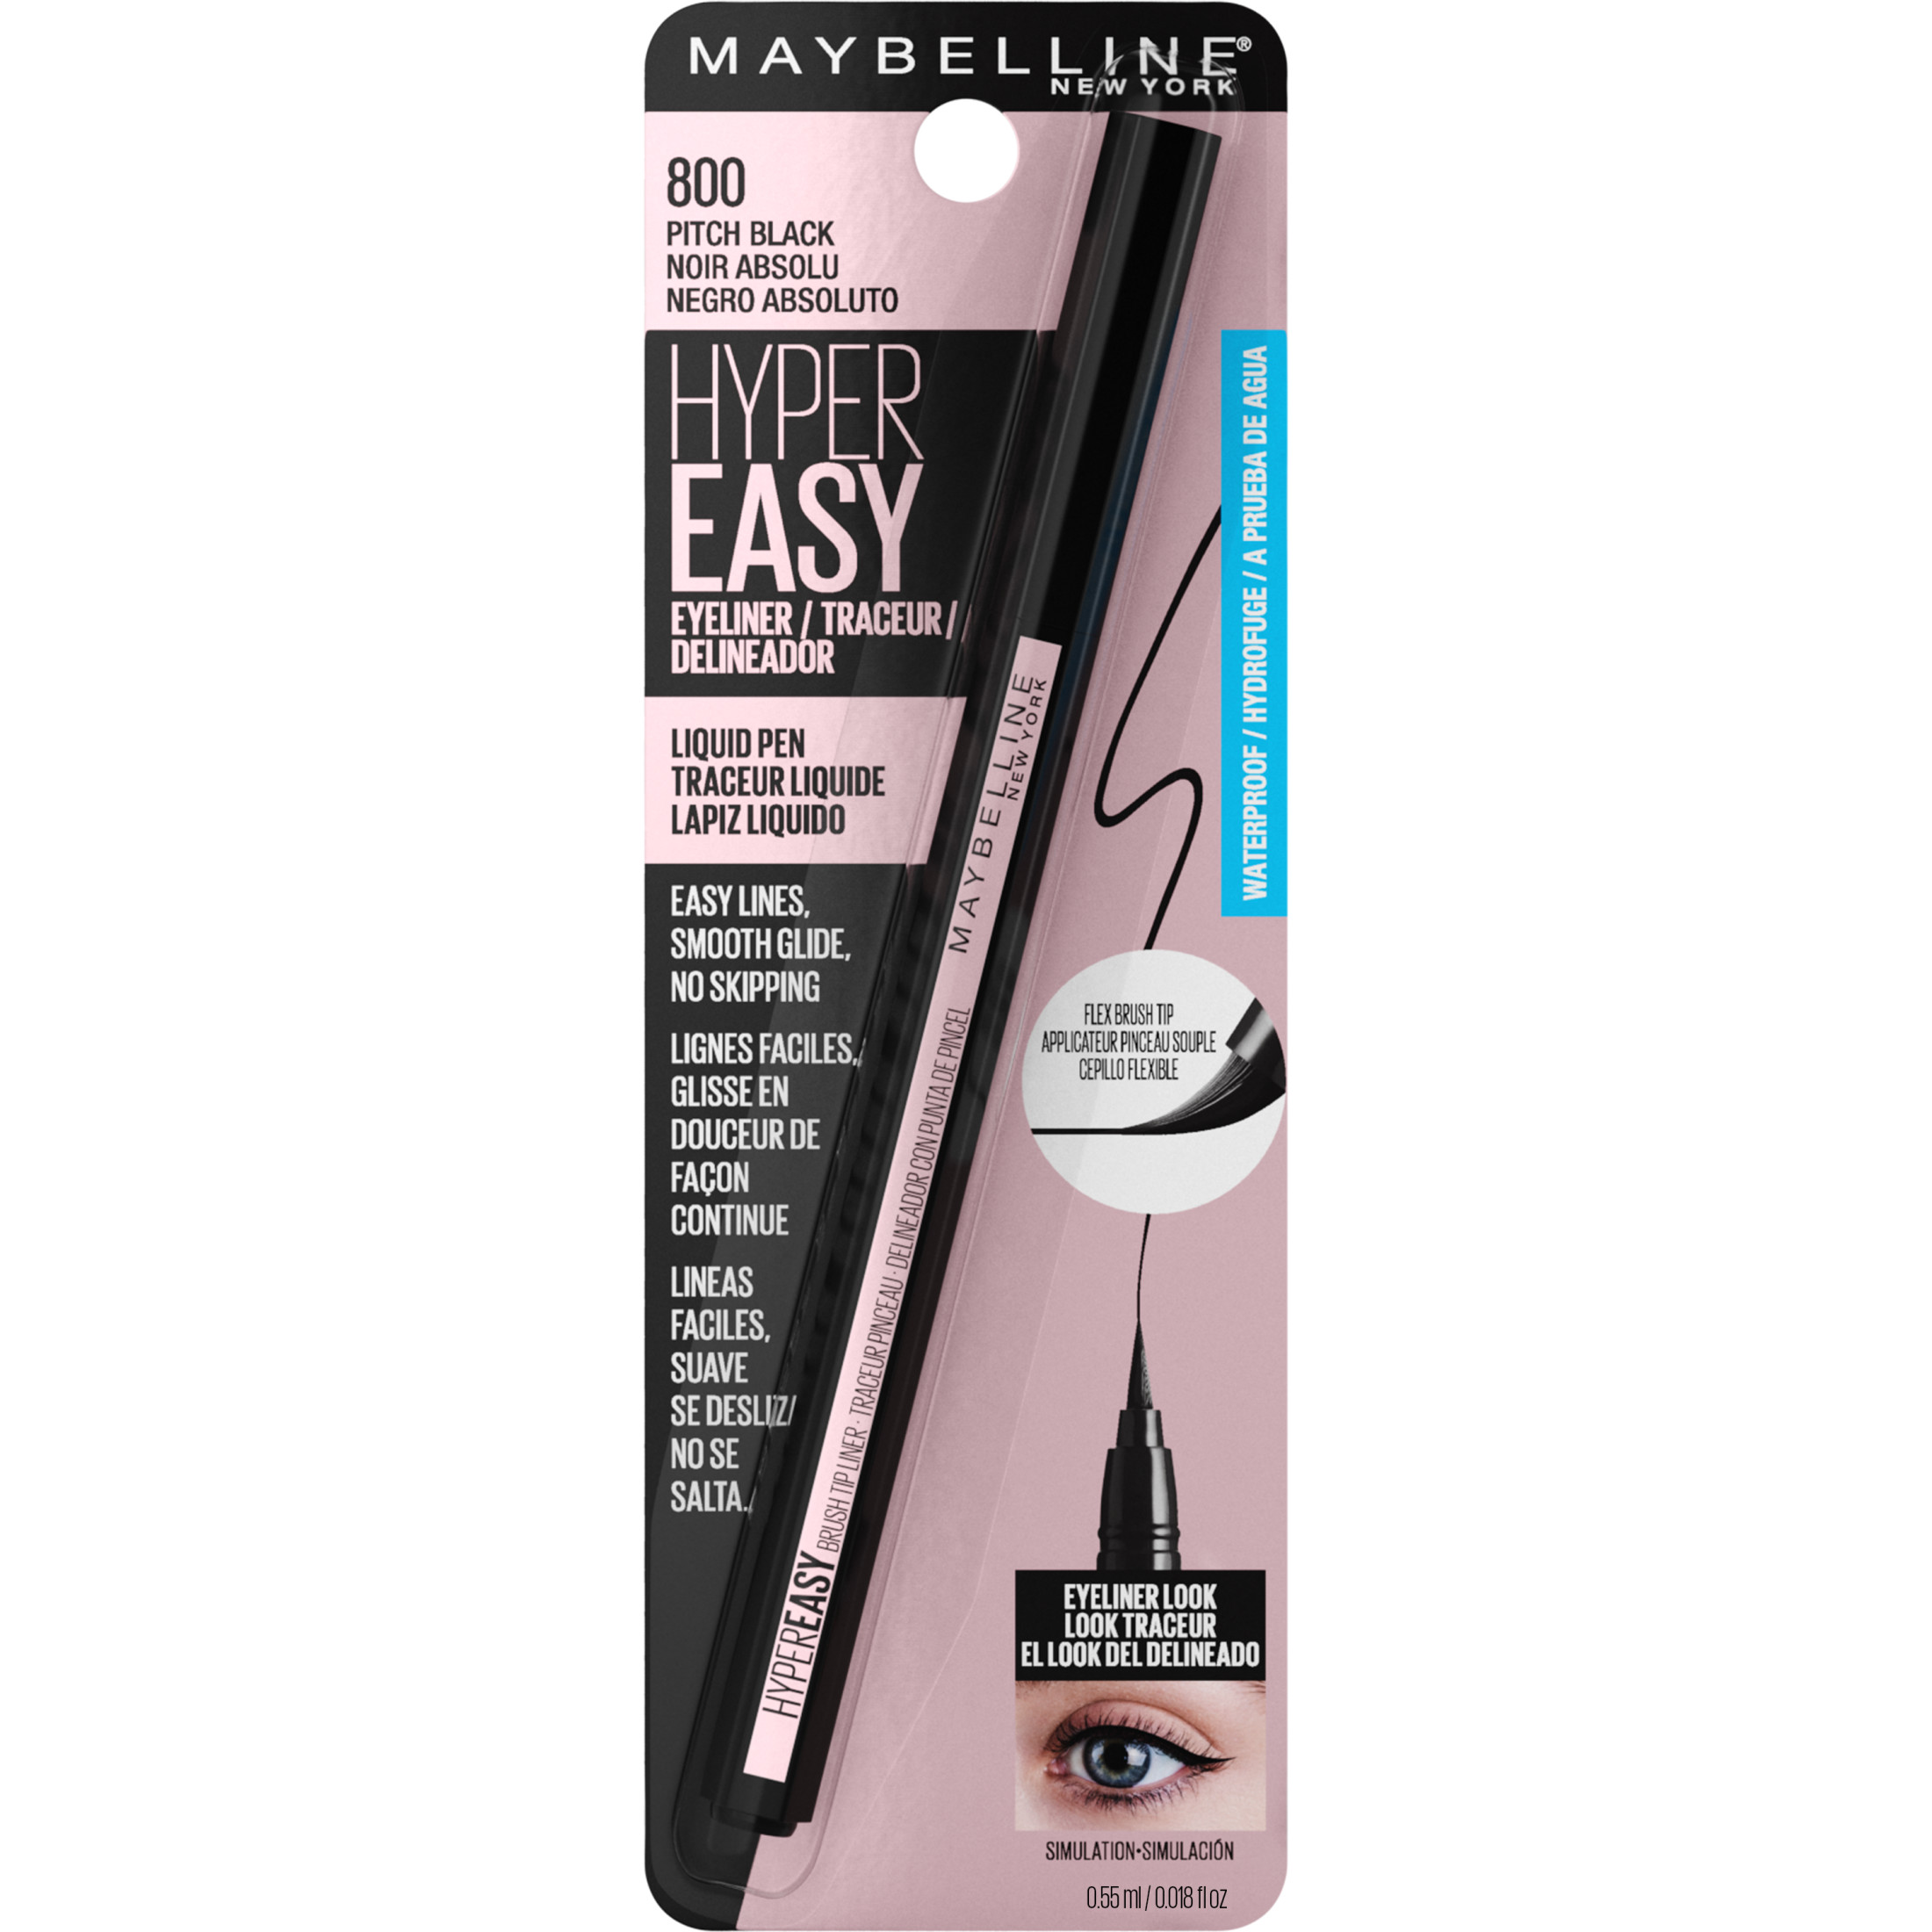 Maybelline EyeStudio Hyper Easy Liquid Eyeliner, Pitch Black - image 4 of 8